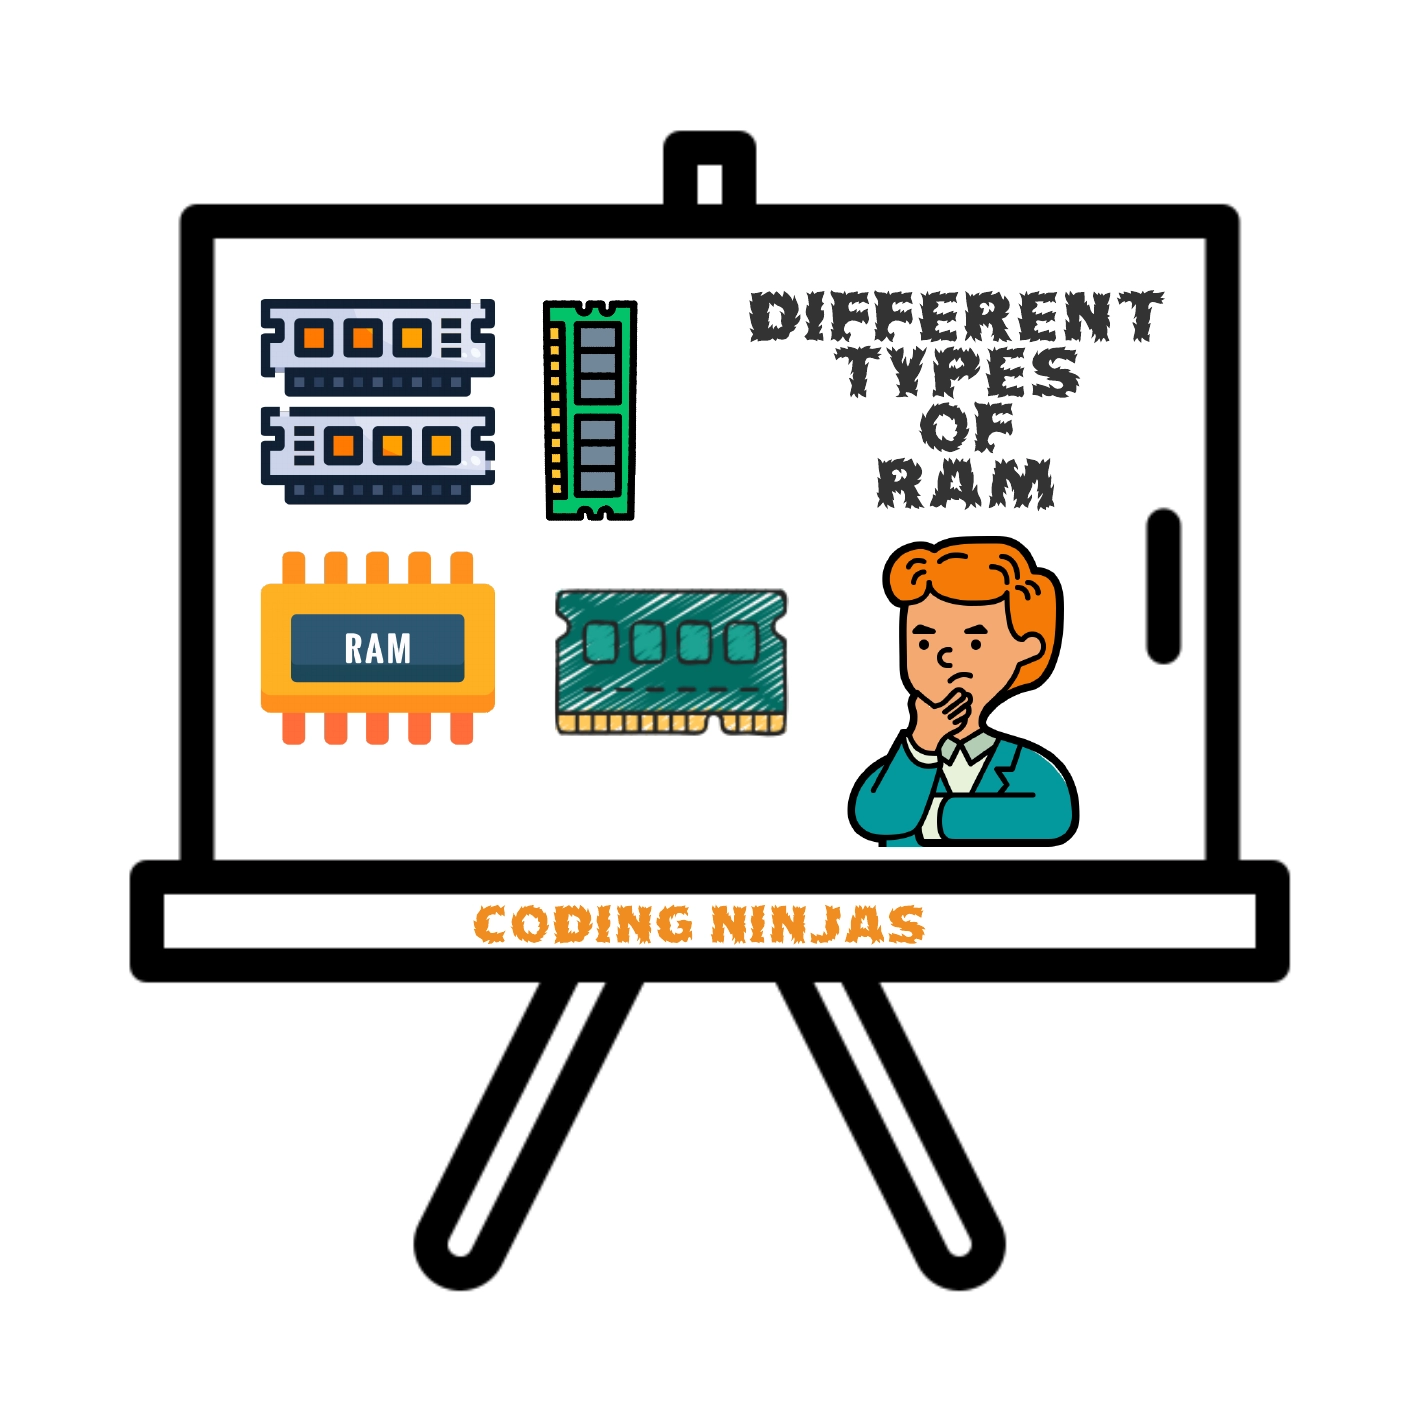 RAM, ROM - Coding Ninjas